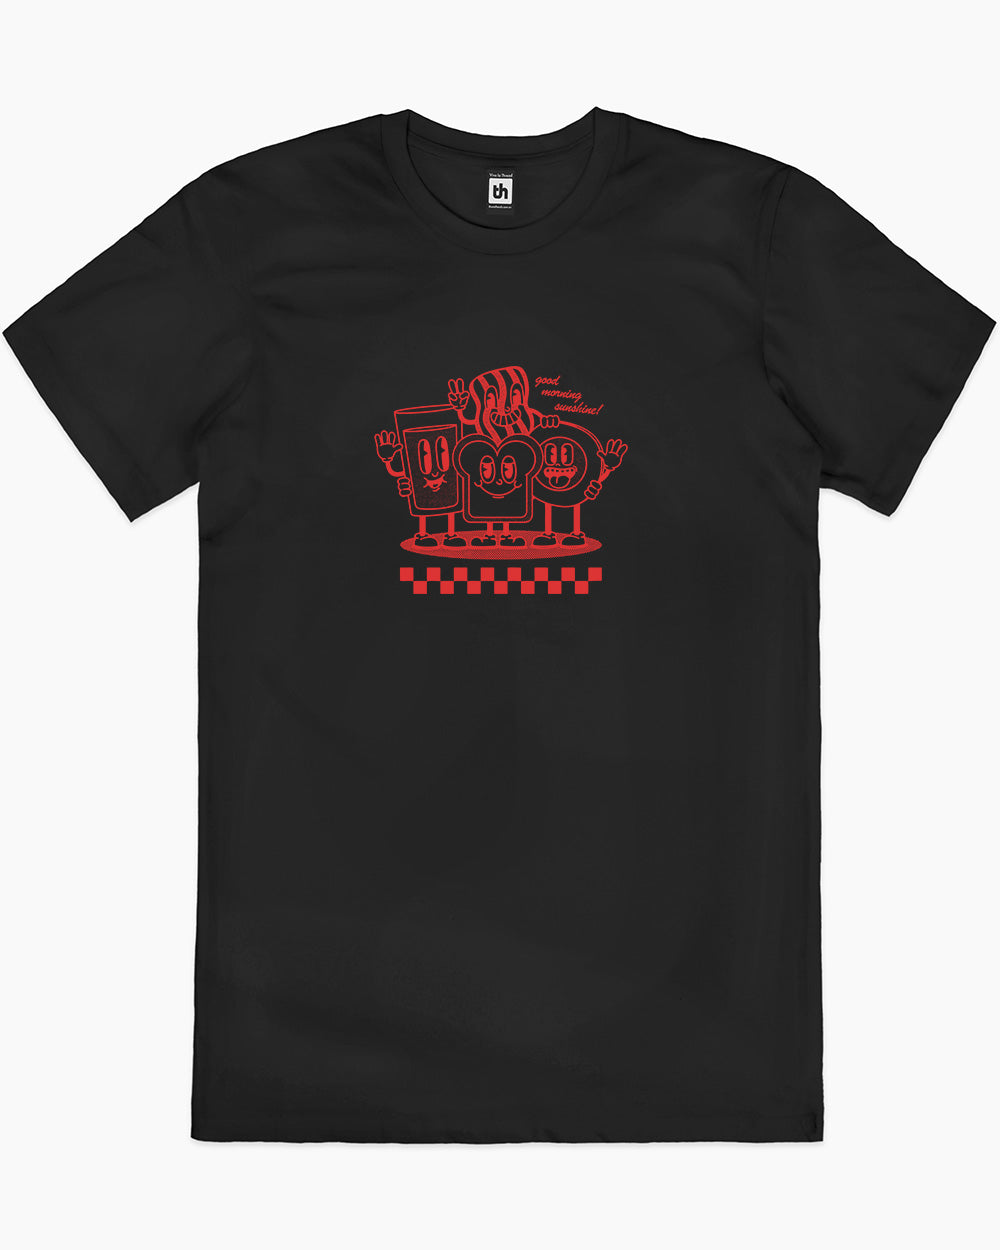 Breakfast Buddies T-Shirt Australia Online #colour_black